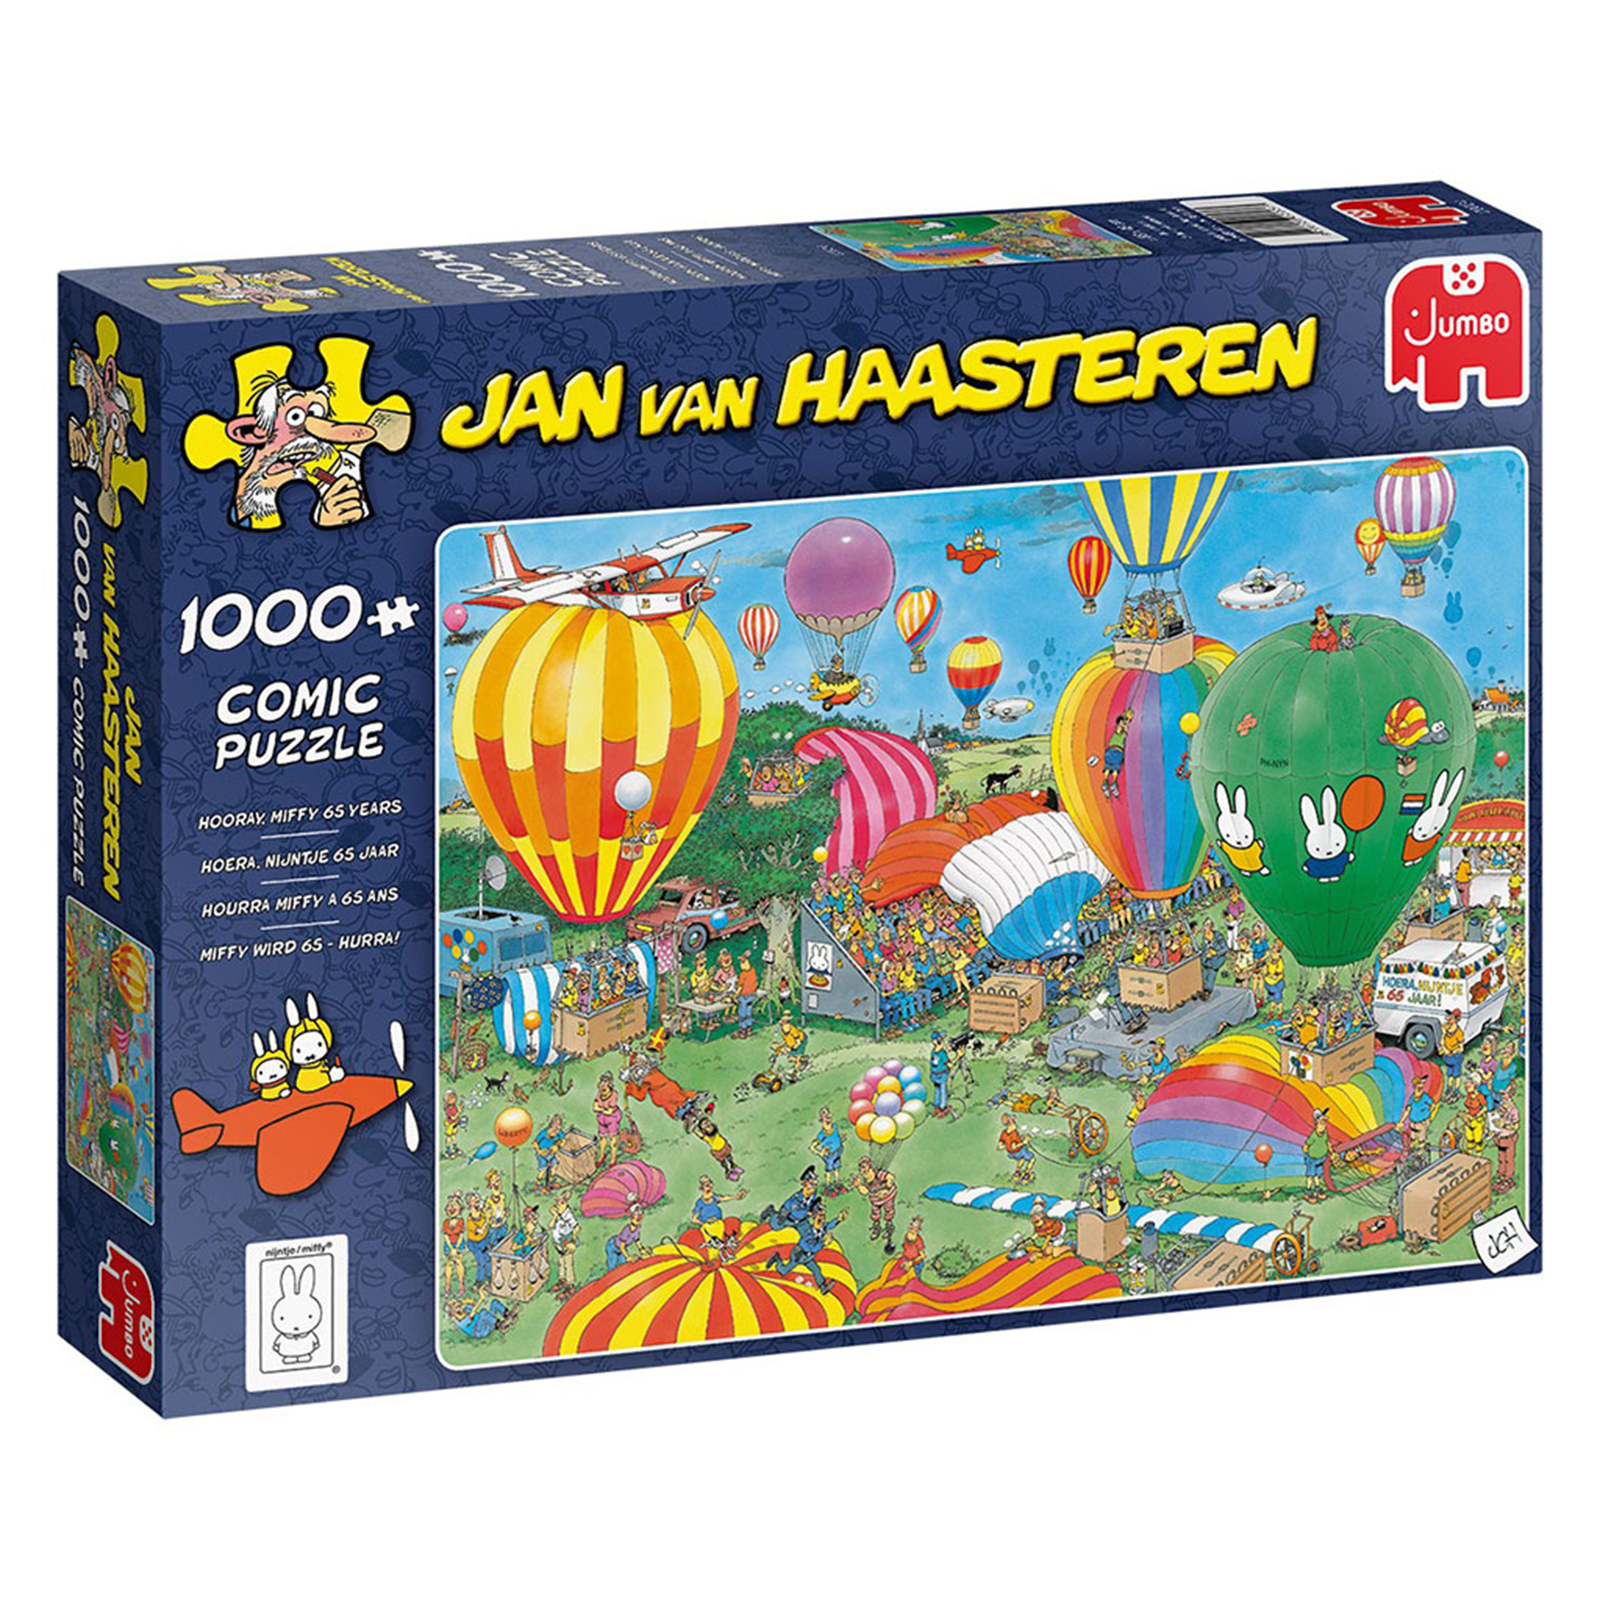 Jan van Haasteren - Miffy 65 år (1000 brikker)